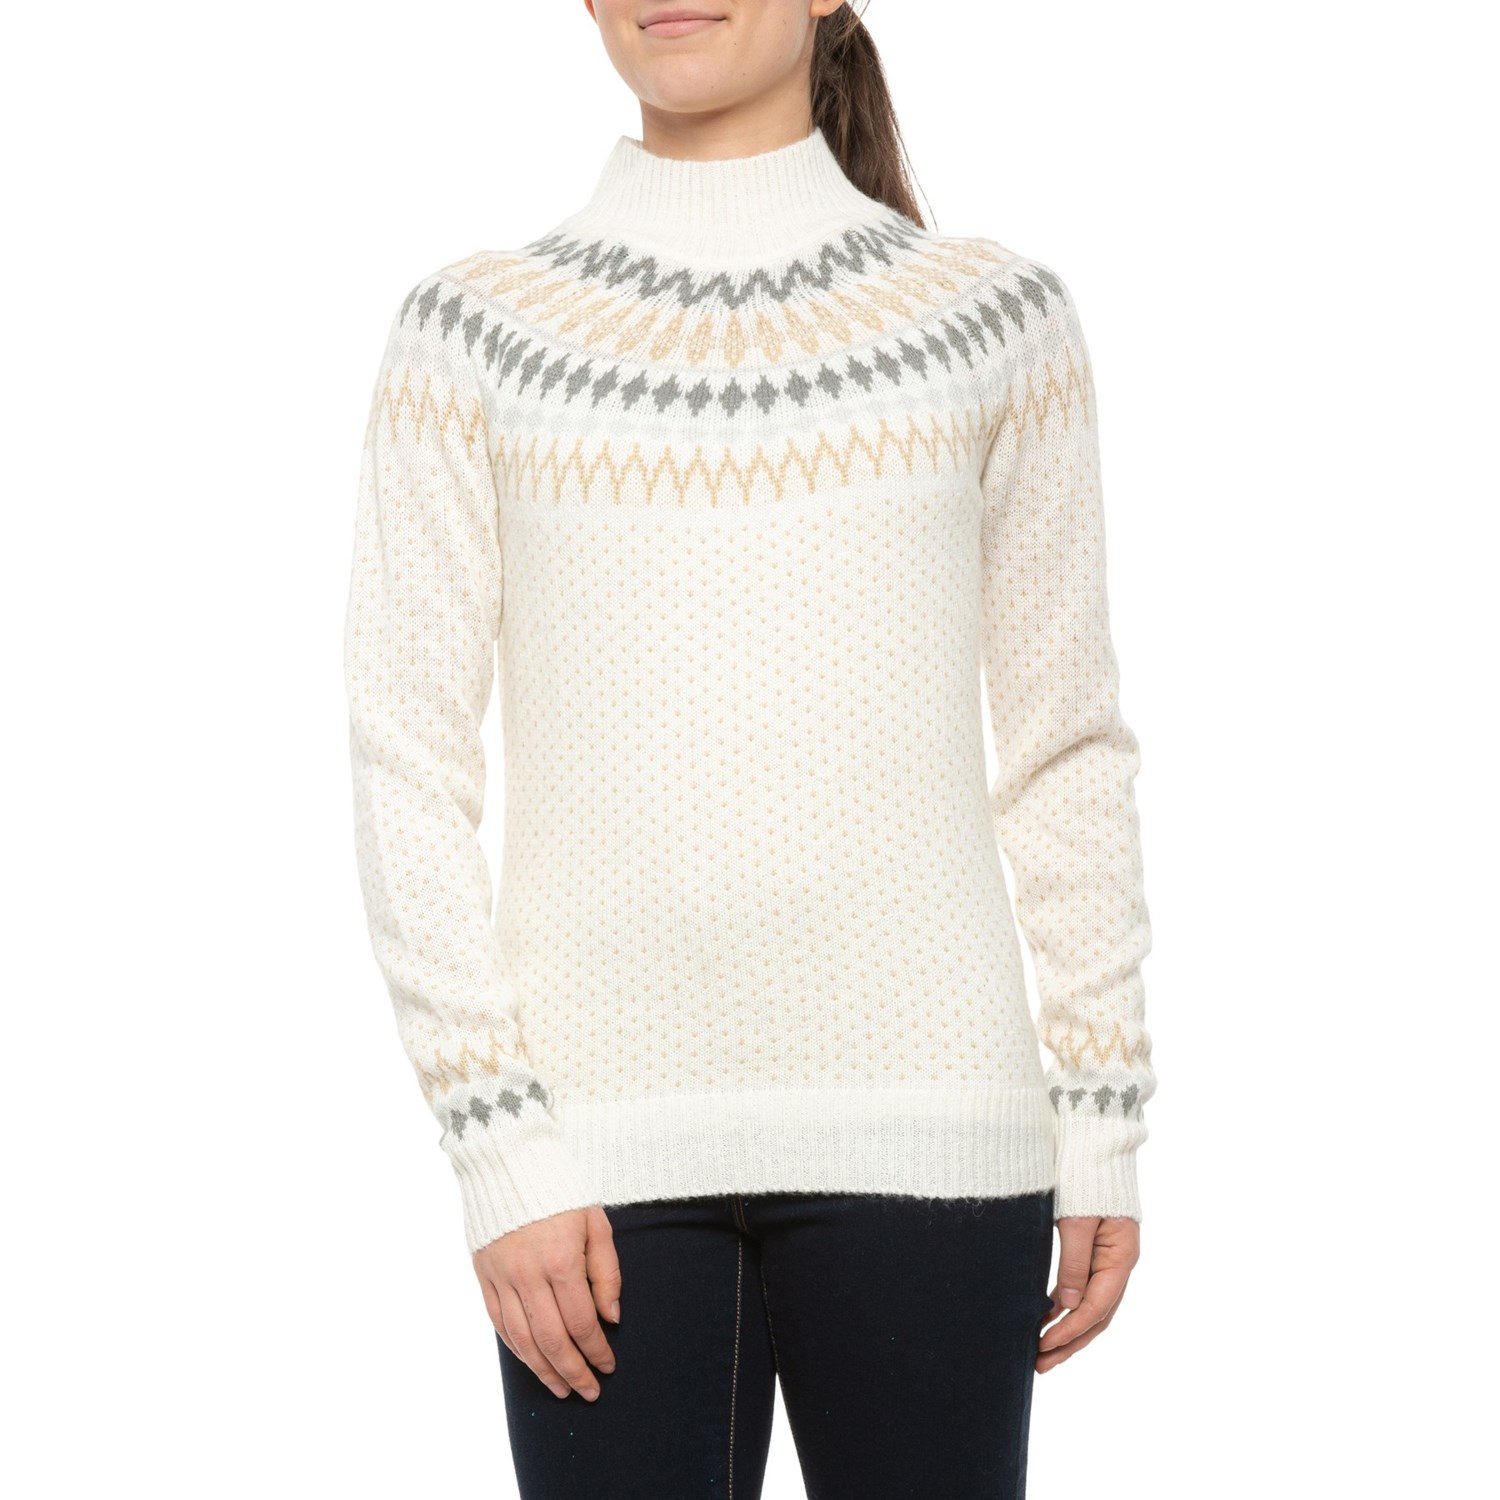 isle sweater women's